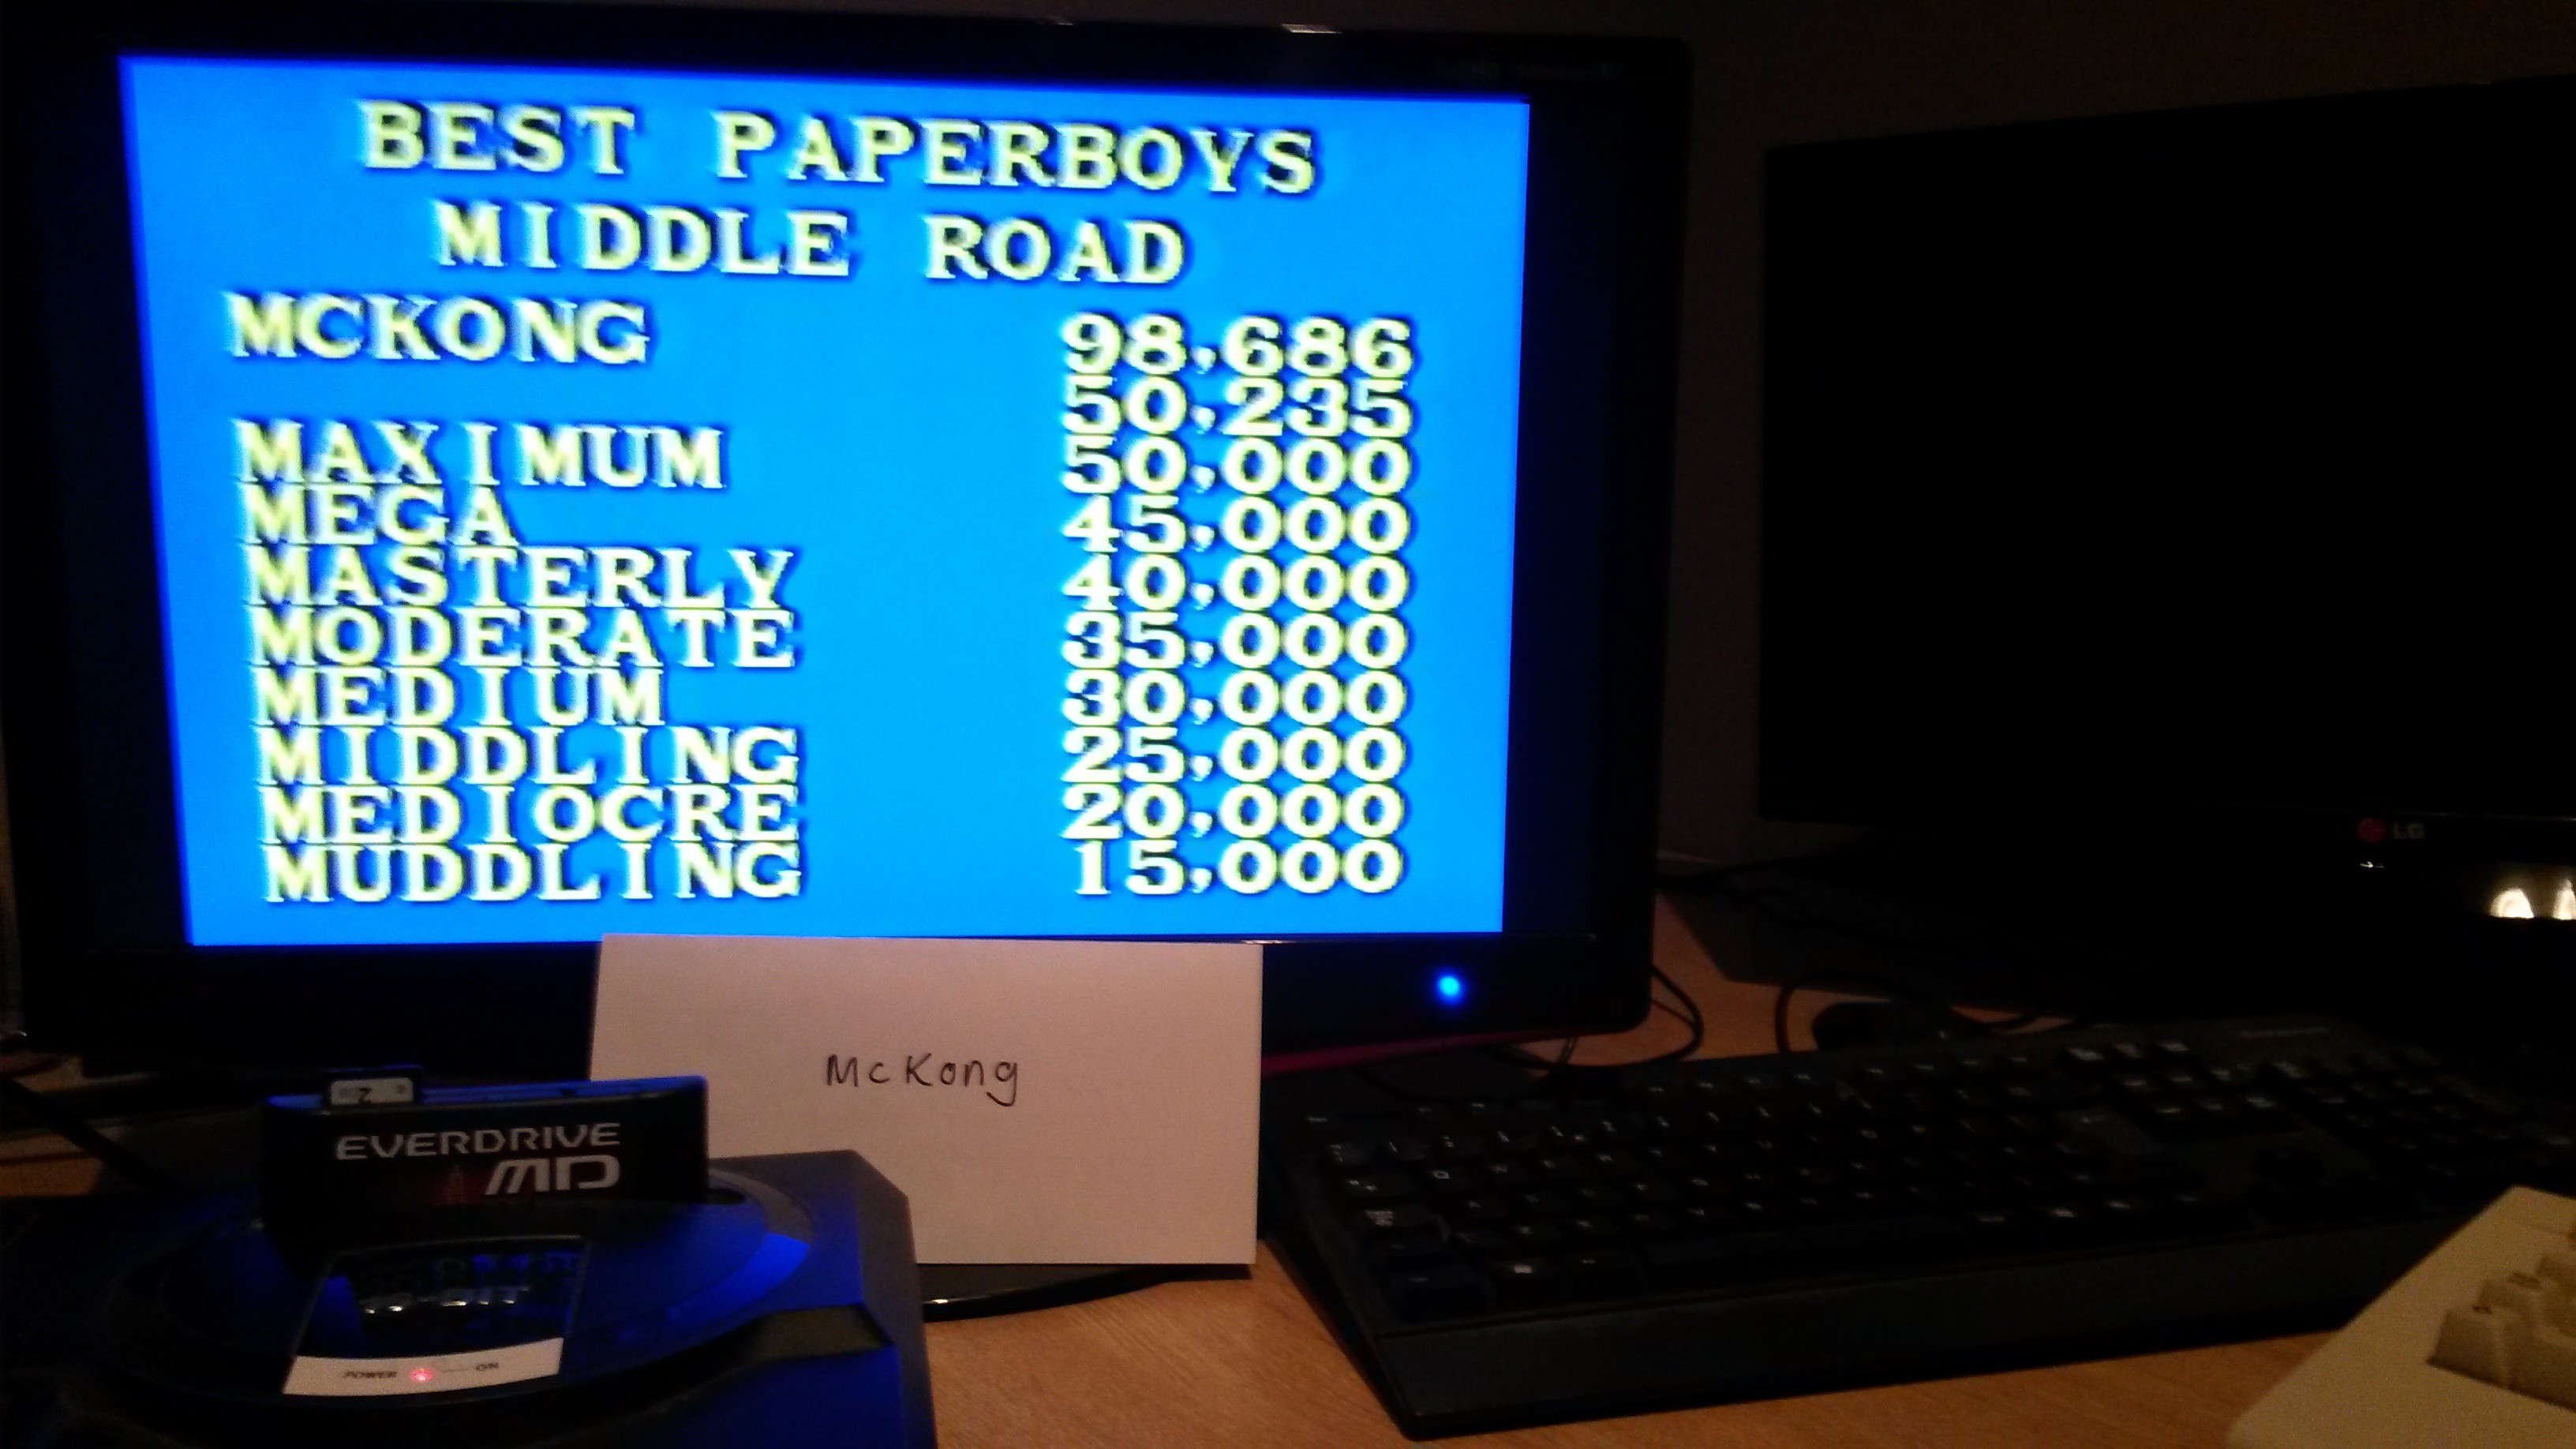 McKong: Paper Boy: Middle Road [Medium] (Sega Genesis / MegaDrive) 98,686 points on 2015-06-26 15:07:29